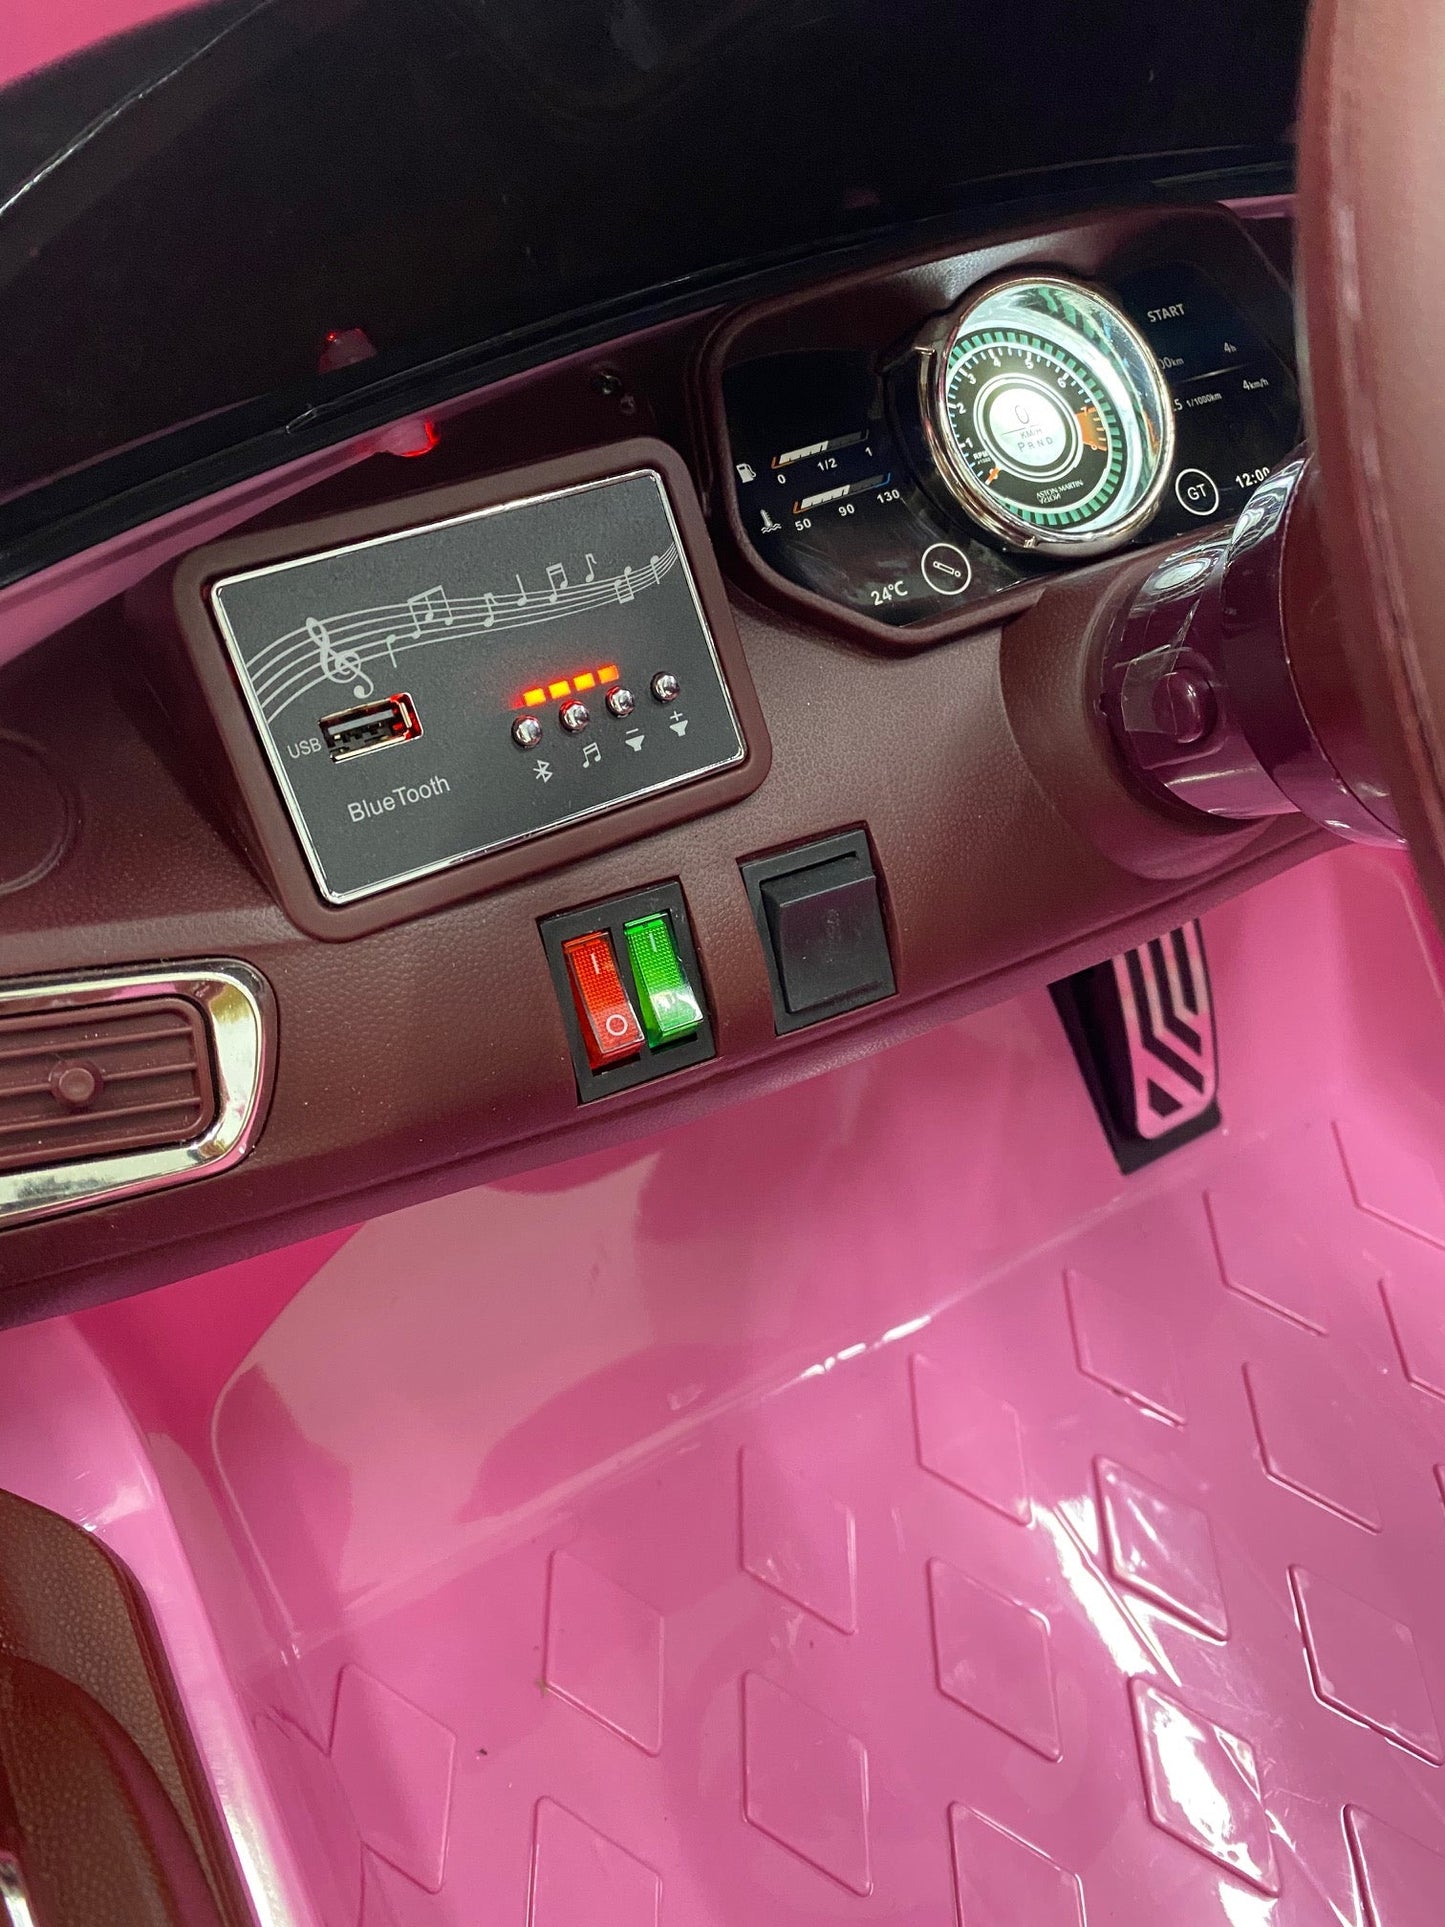 Pink Aston Martin DB11 Kids Electric Ride on Car